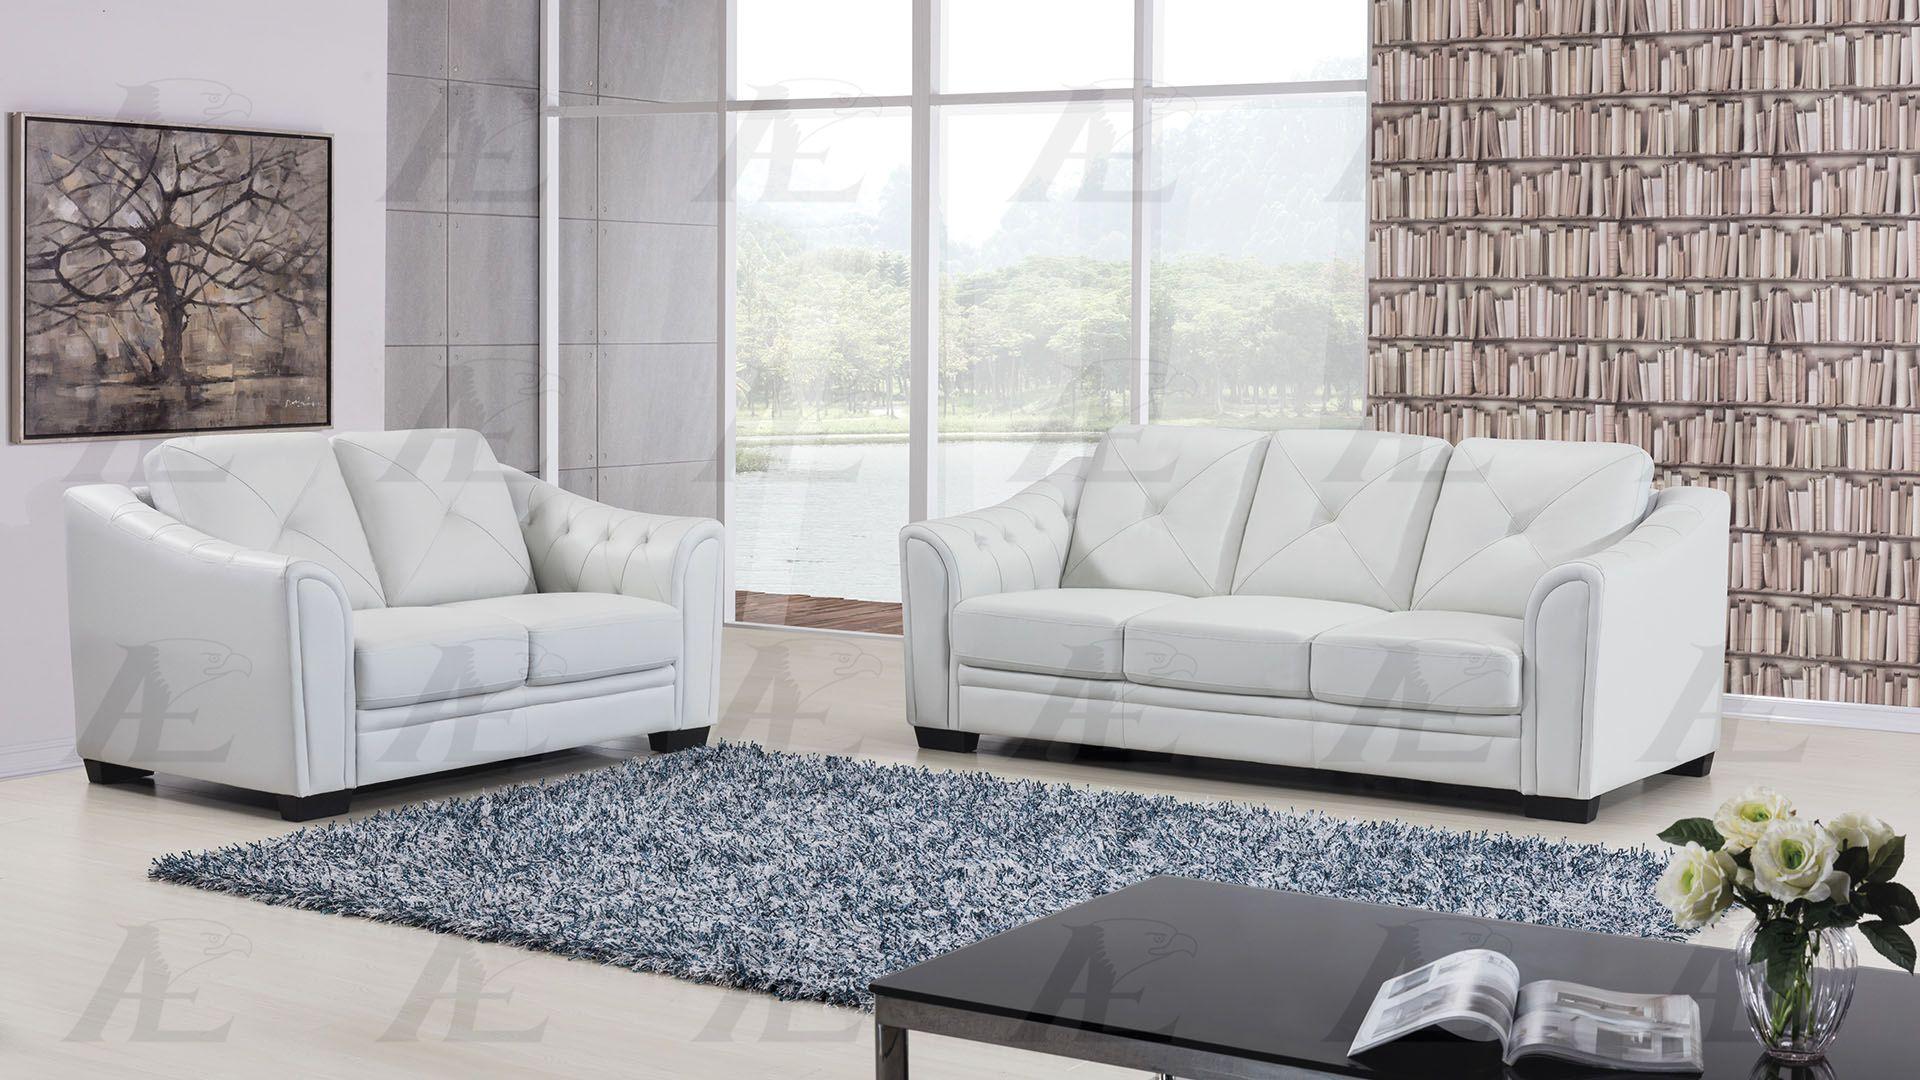 

    
American Eagle EK519 Light Ash Gray Genuine Leather Living Room Sofa Set 2pcs in Contemporary Style
